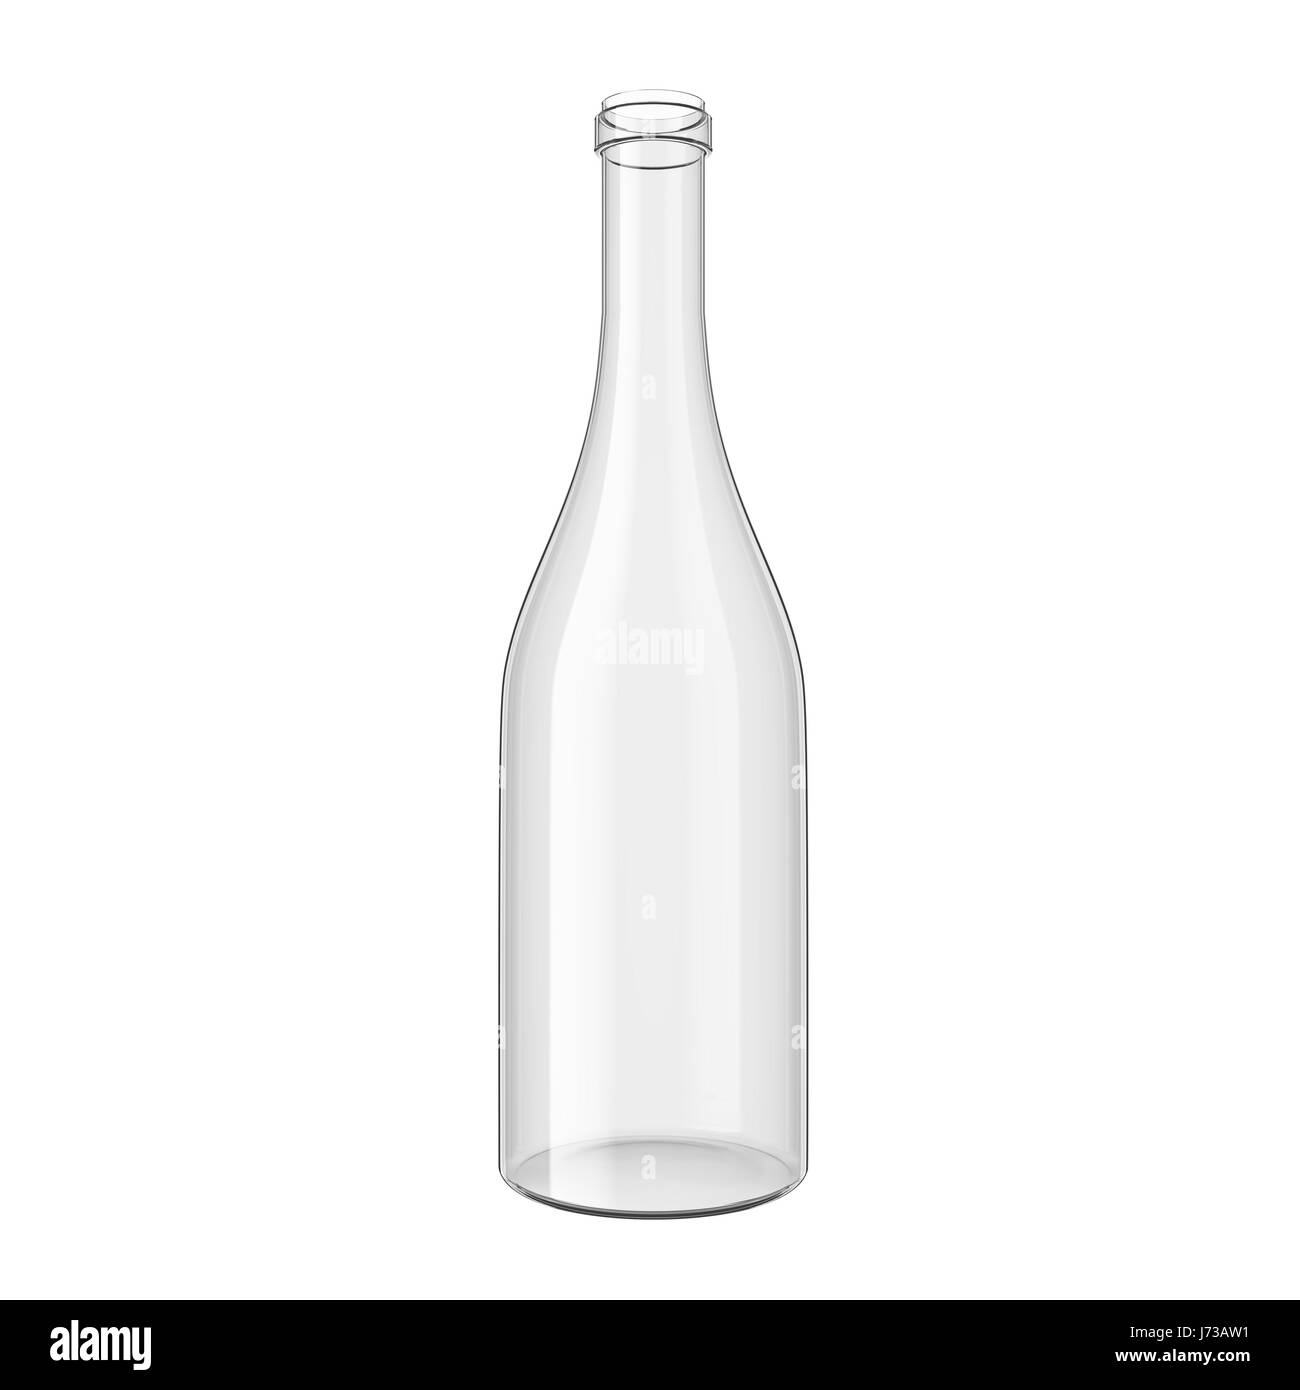 Bottle isolated on a white background. Stock Photo